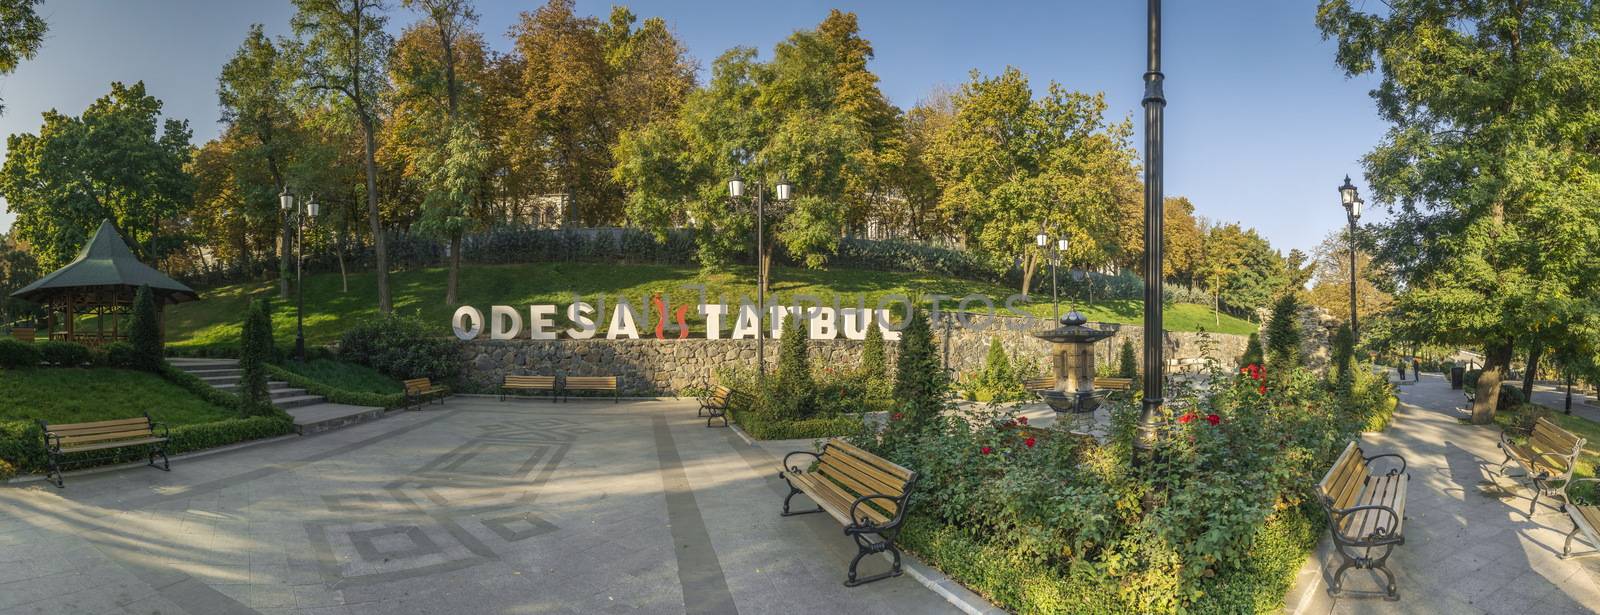 Istambul Park in Odessa, Ukraine at fall by Multipedia